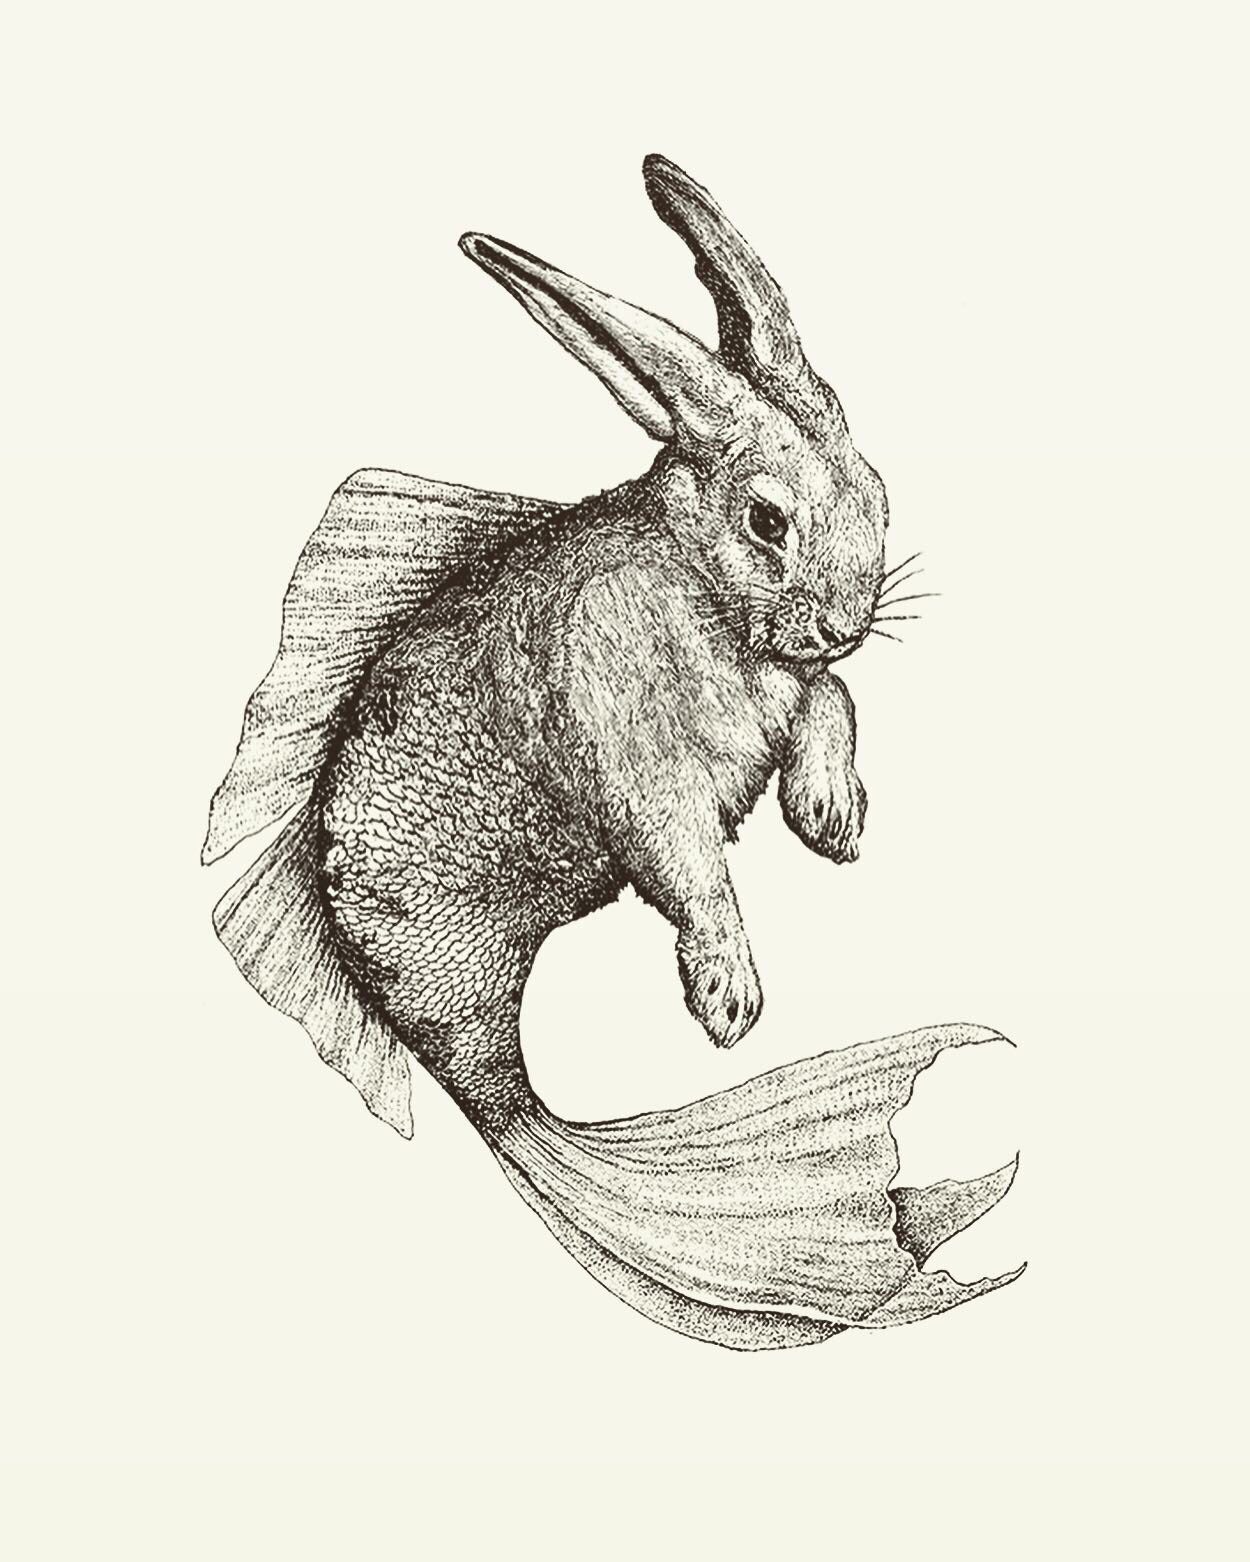 Animal Illustrations wood engraving, sea rabbit